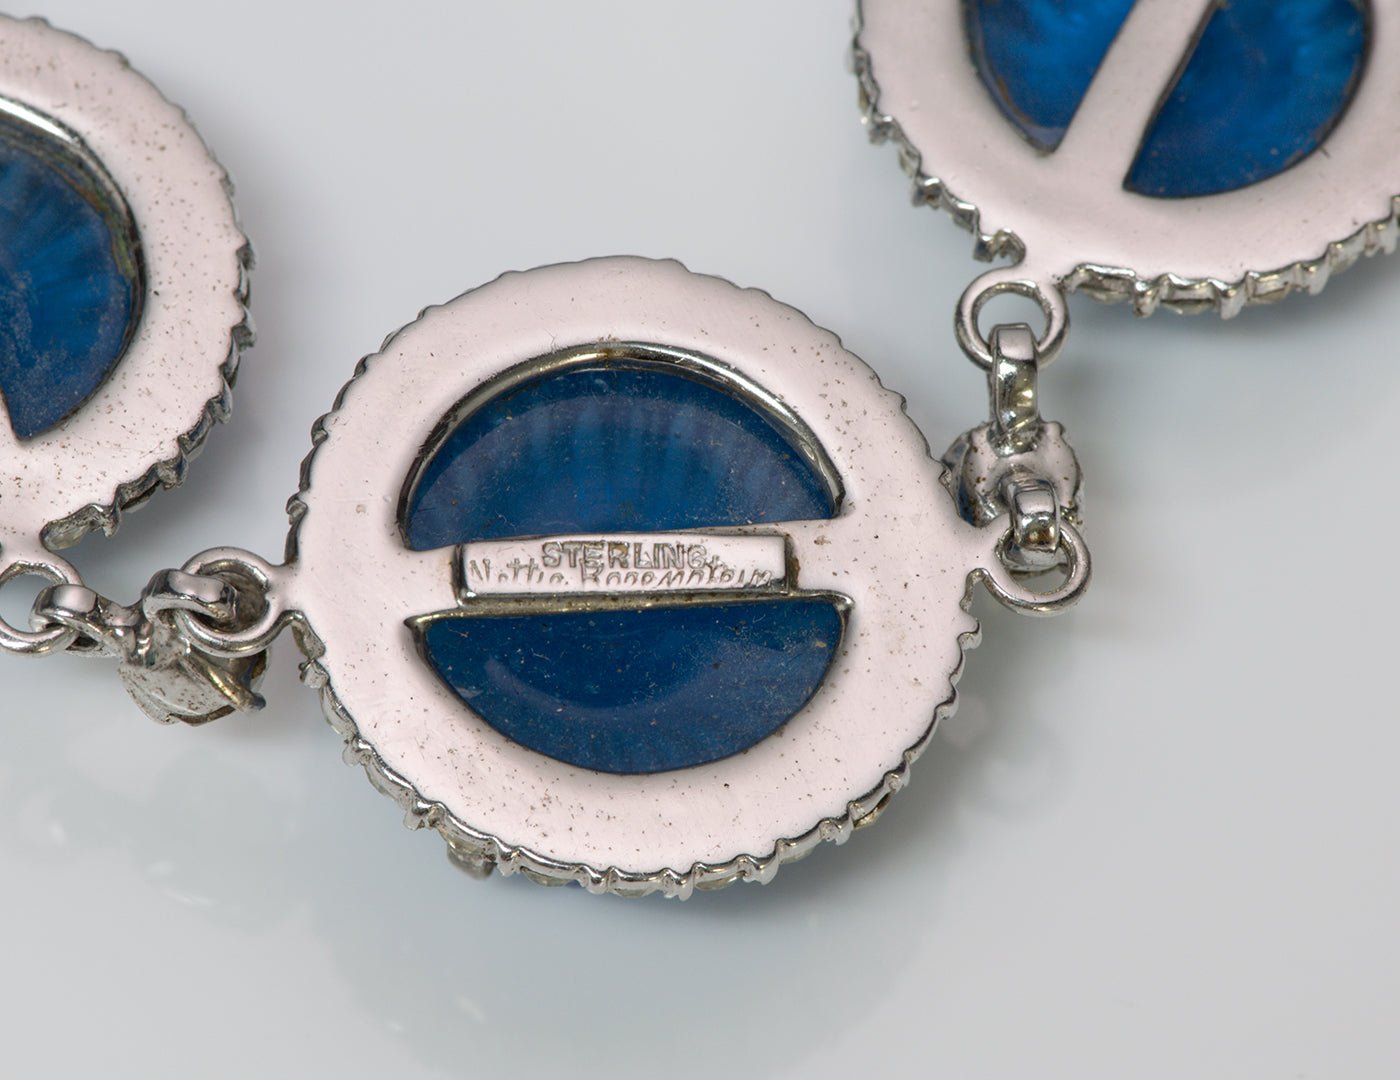 Vintage Nettie Rosenstein Sterling Silver Blue Glass Crystal Necklace